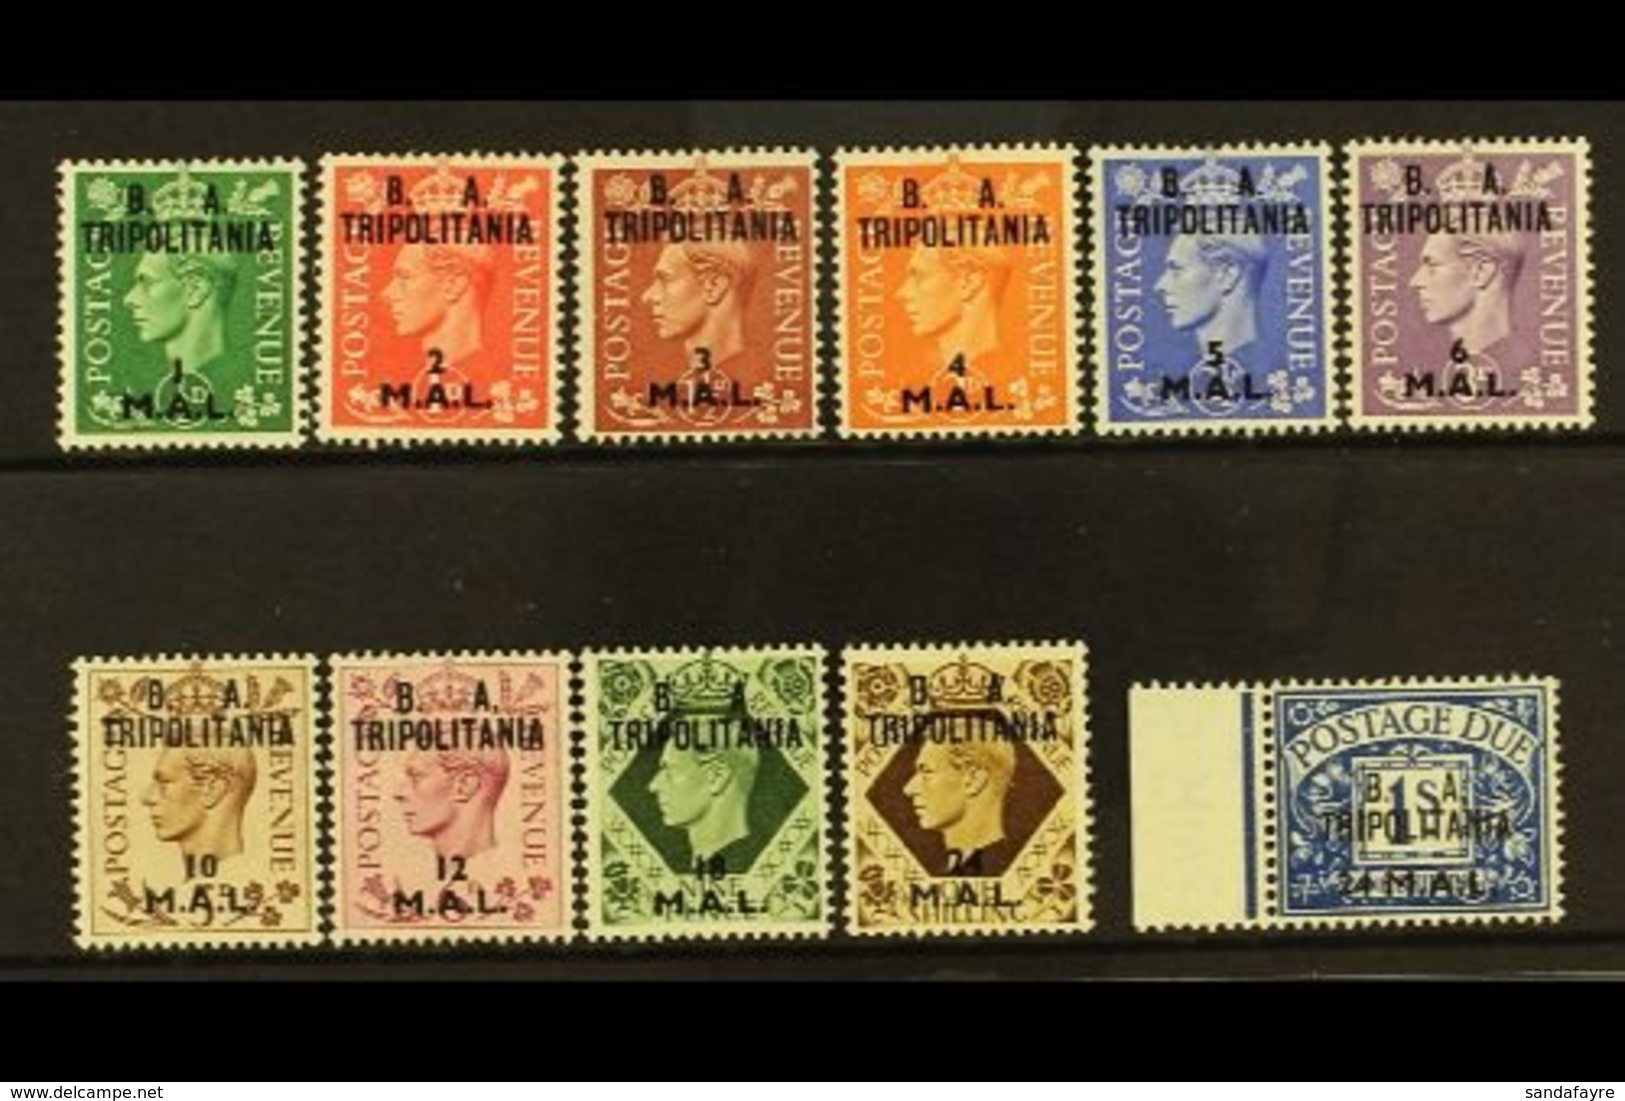 \Y TRIPOLITANIA\Y 1950 "B.A." Set To 24L On 1s (SG T14/23), Plus 24L On 1s Postage Due (SG TD10), Very Fine Mint. (11 St - Afrique Orientale Italienne